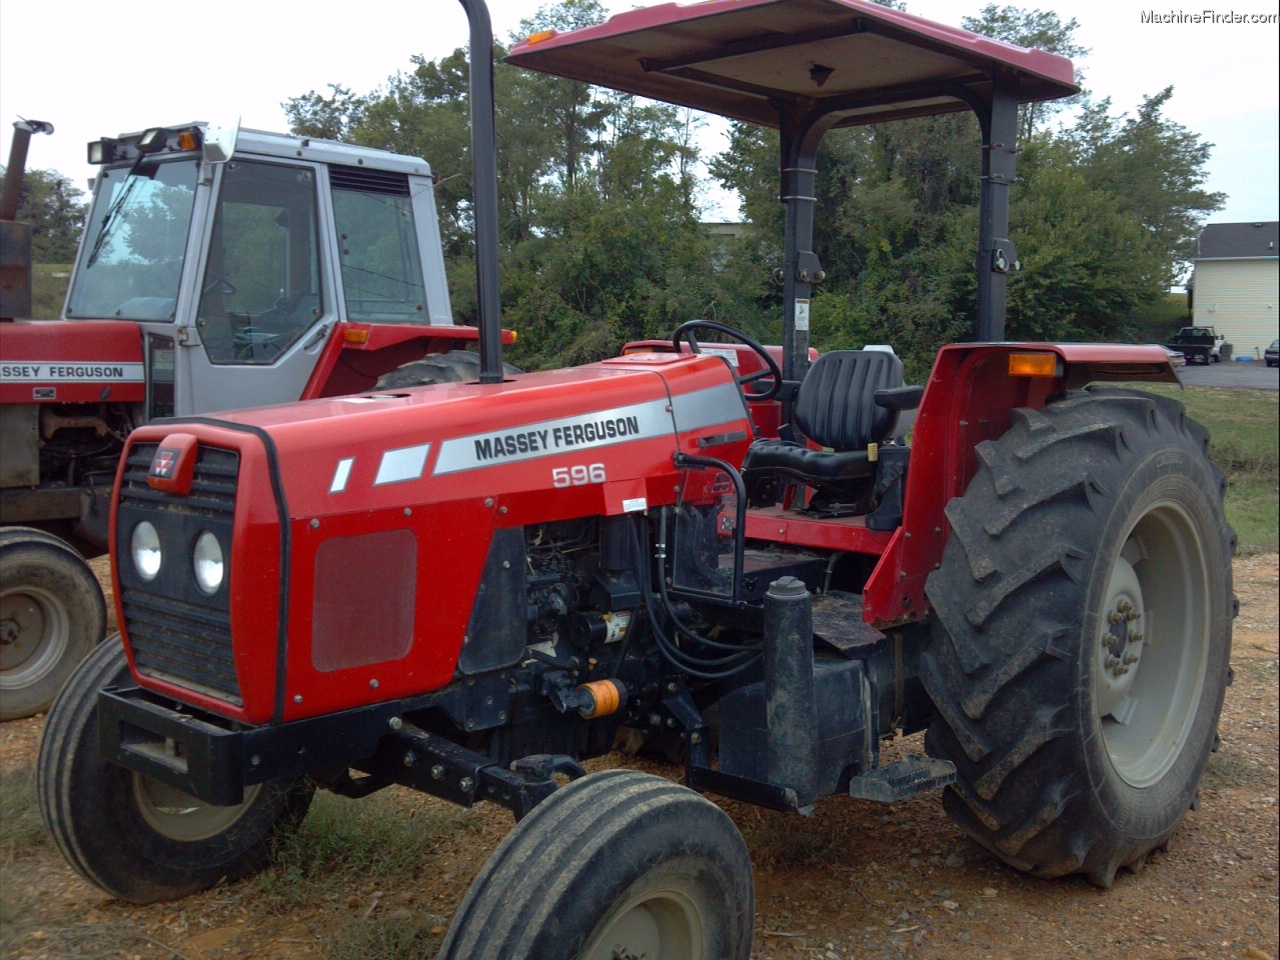 2006 Massey - Ferguson 596 Tractors - Utility (40-100hp) - John Deere ...